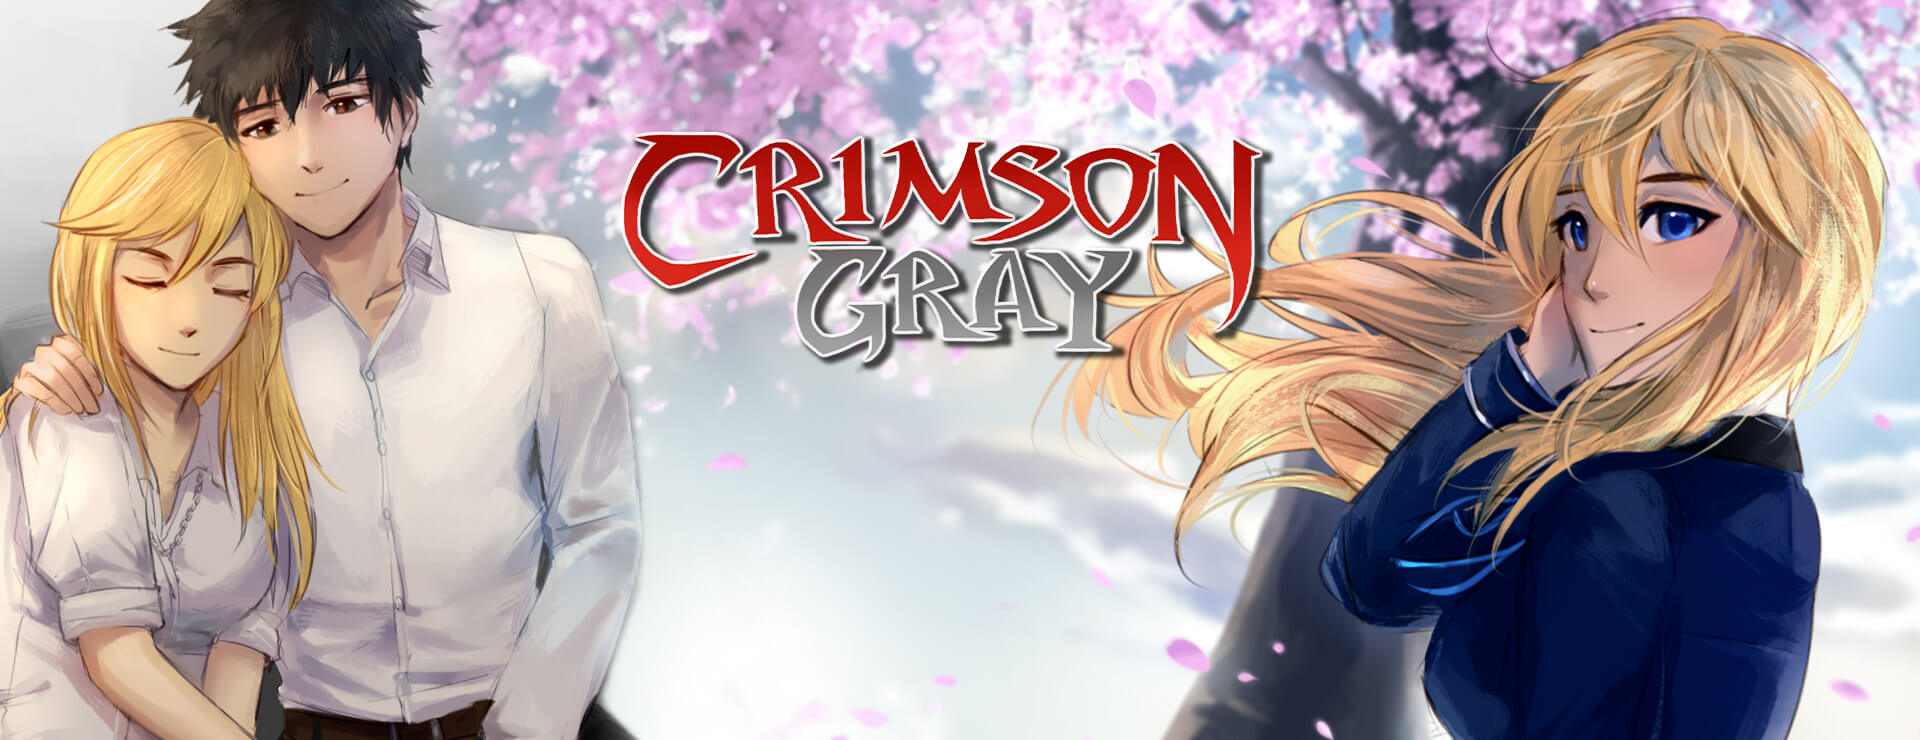 Crimson Gray (SFW Version) - Action Adventure Spiel